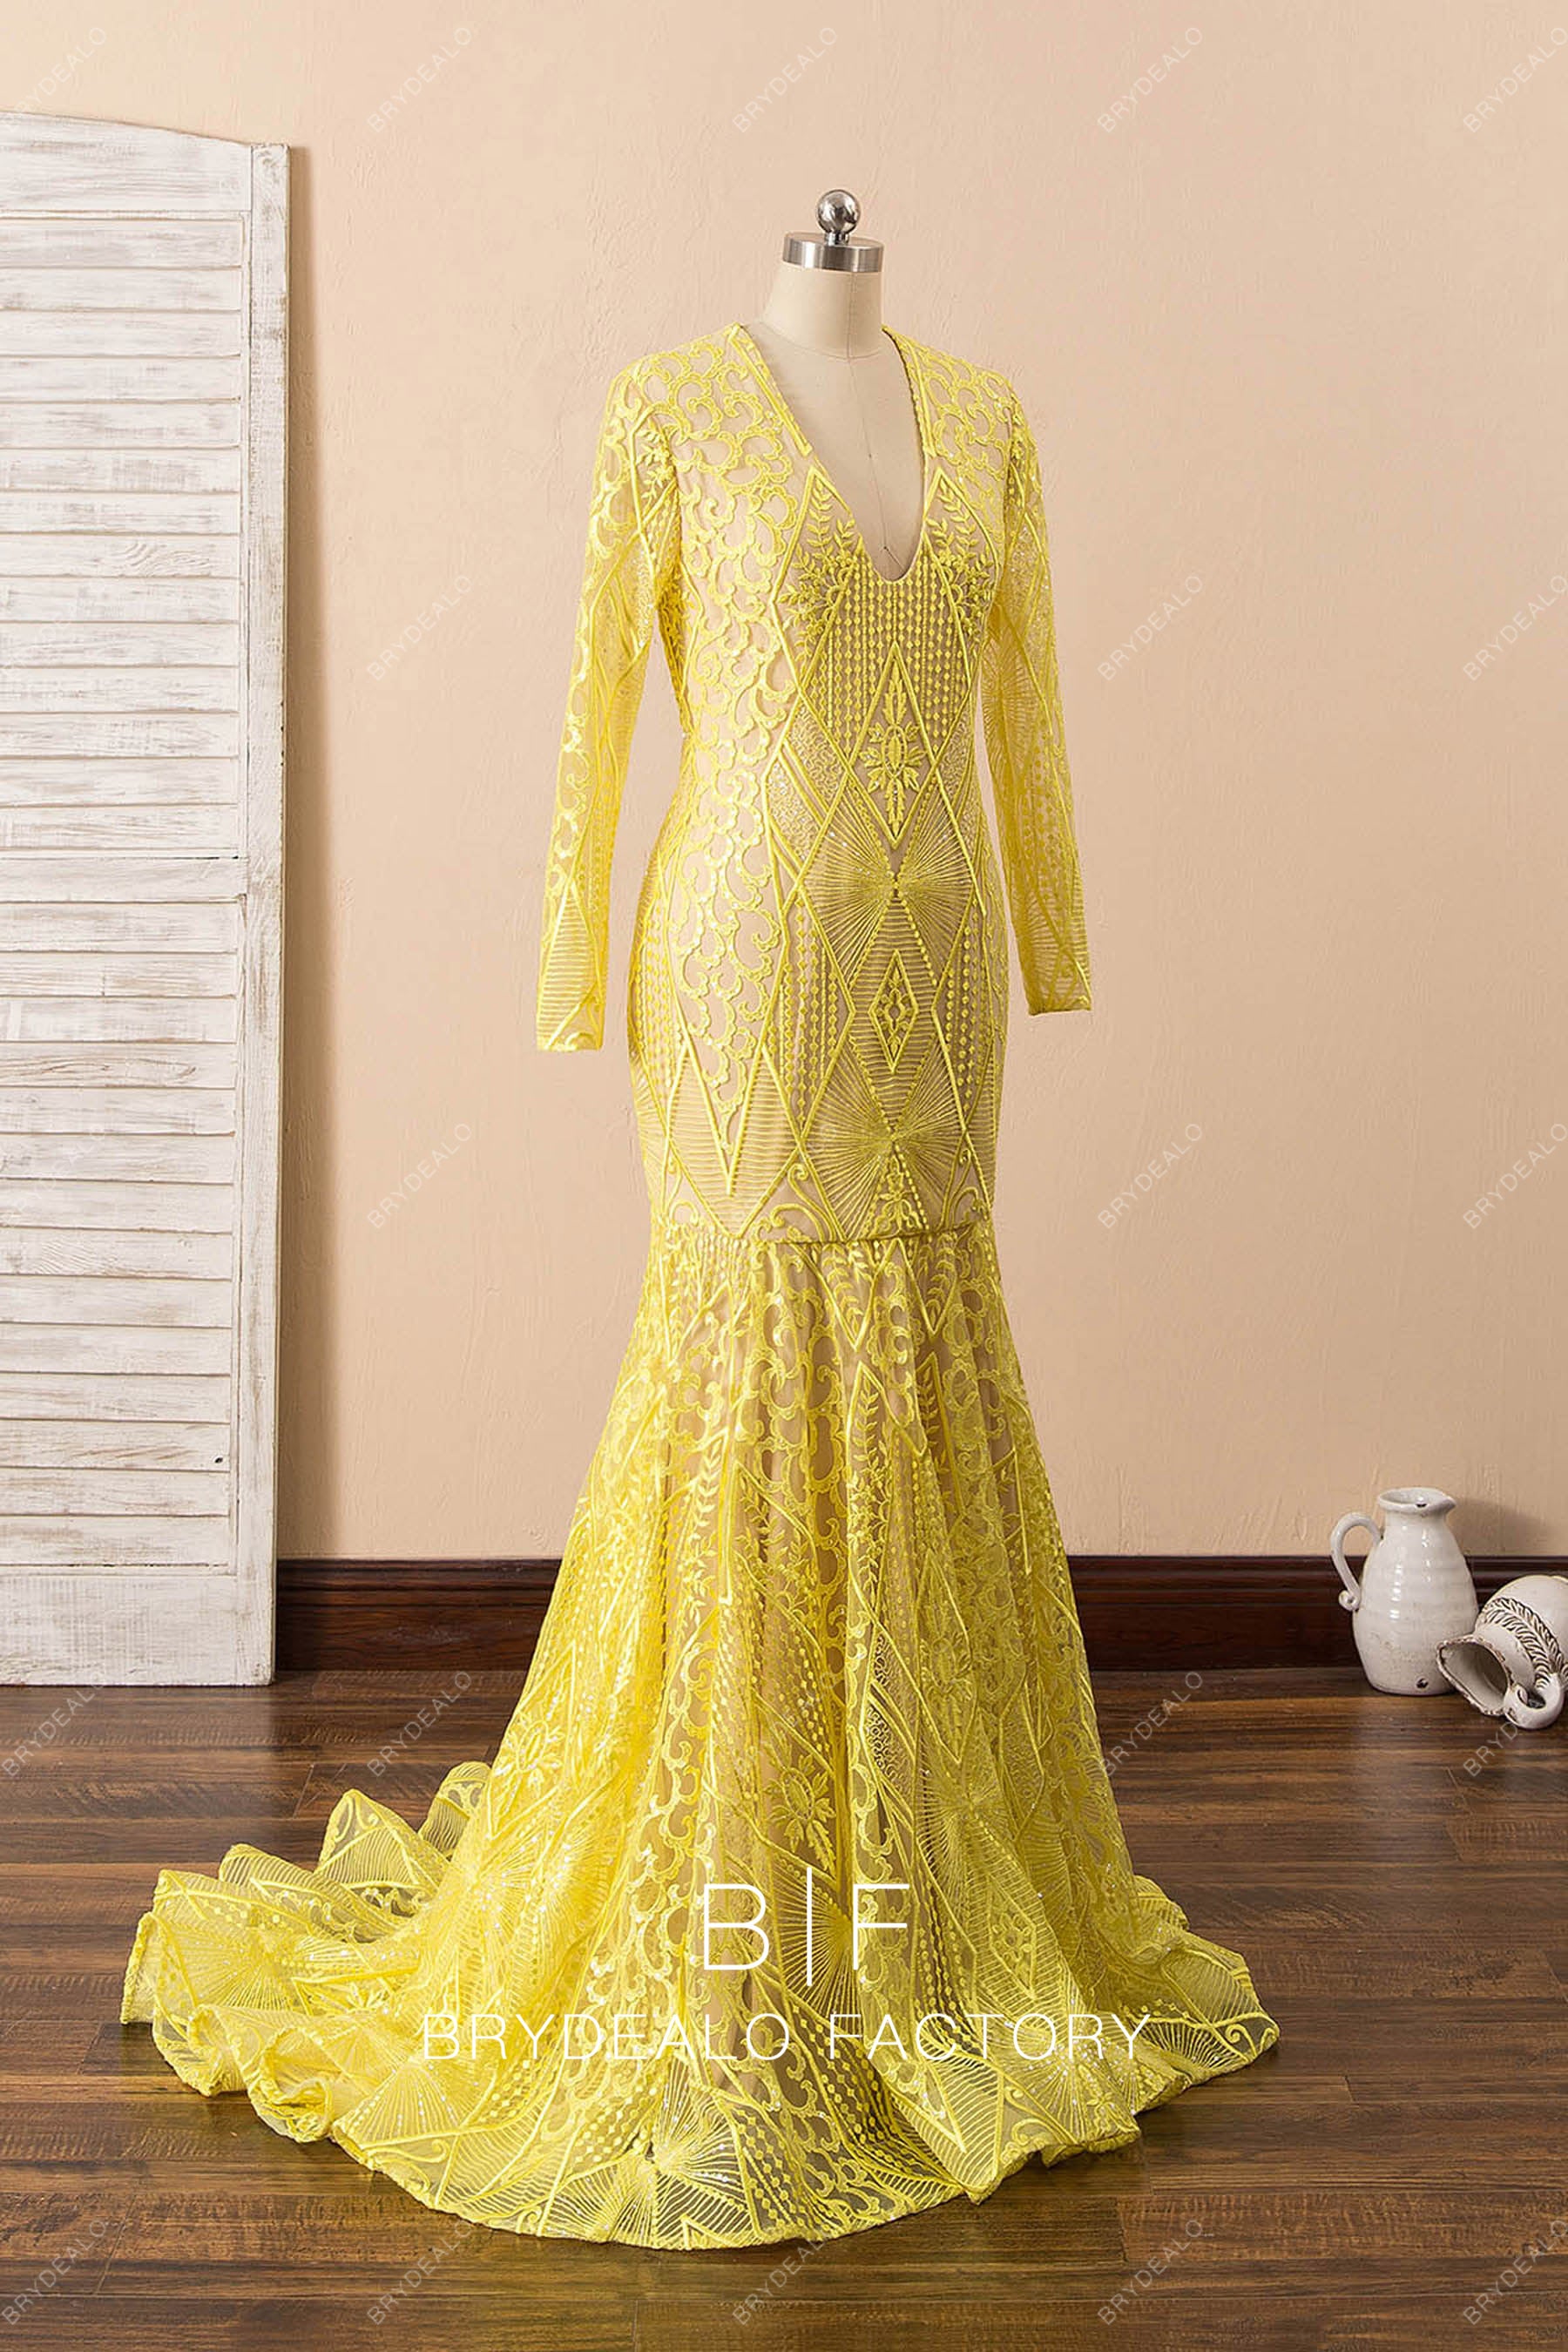 patterned lace long formal dress